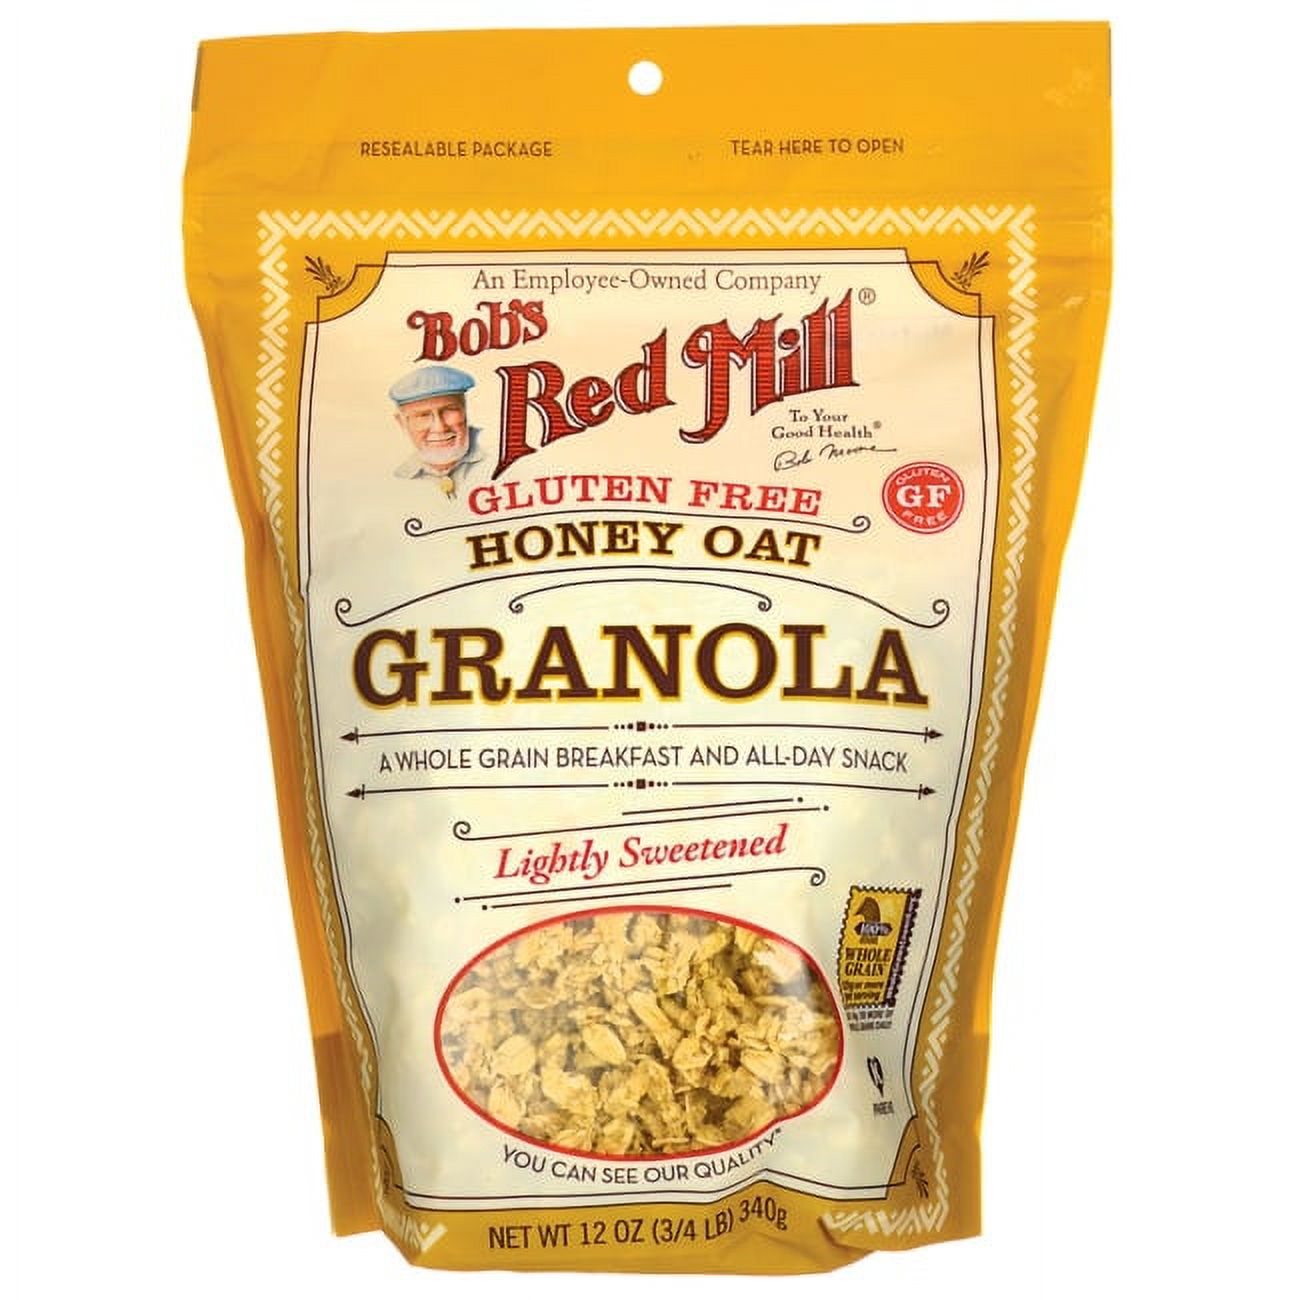 Bob's Red Mill Gluten Free Honey Oat Granola 12 oz Pkg - image 1 of 3